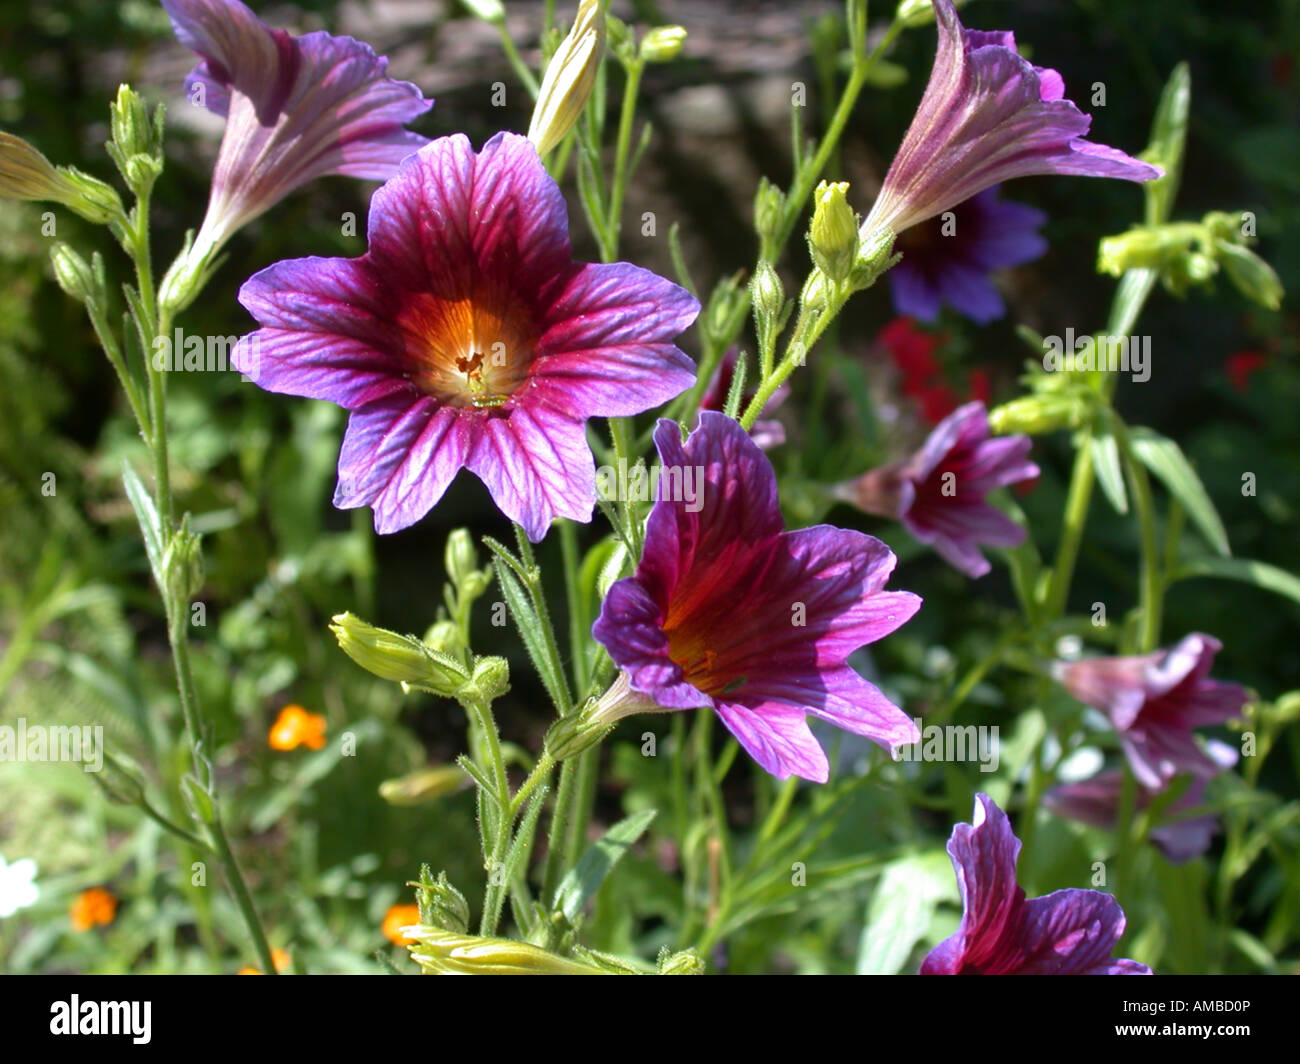 paisley flower (Salpiglossis sinuata), blooming Stock Photo